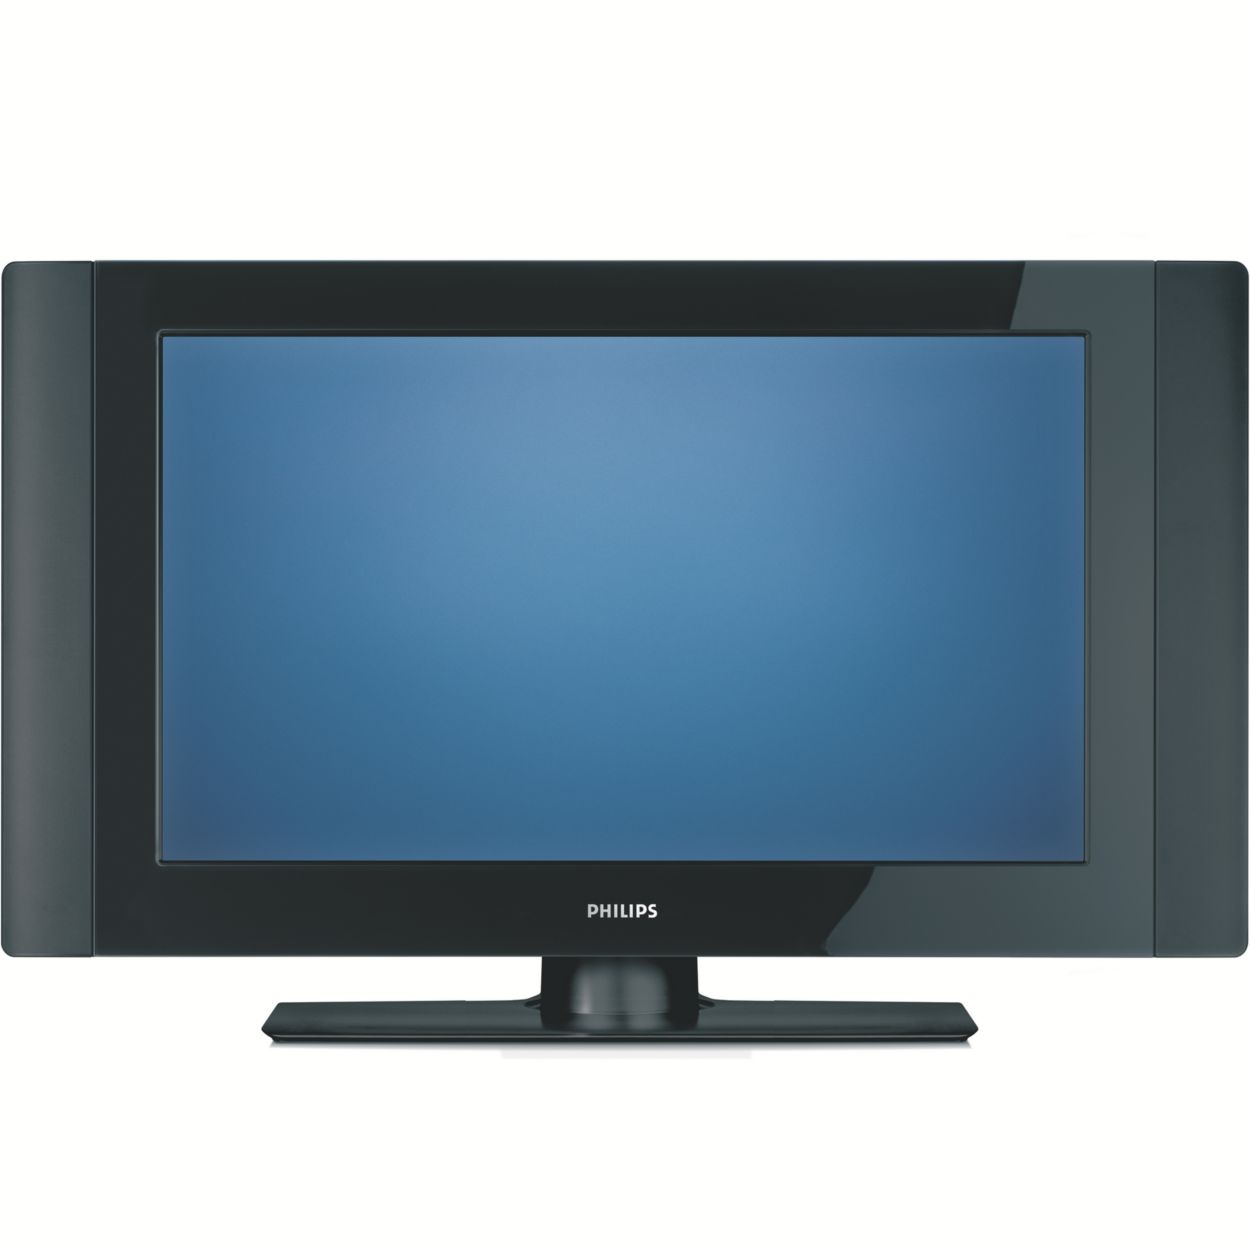 Flat Tv Widescreen 32pfl531278 Philips 1533